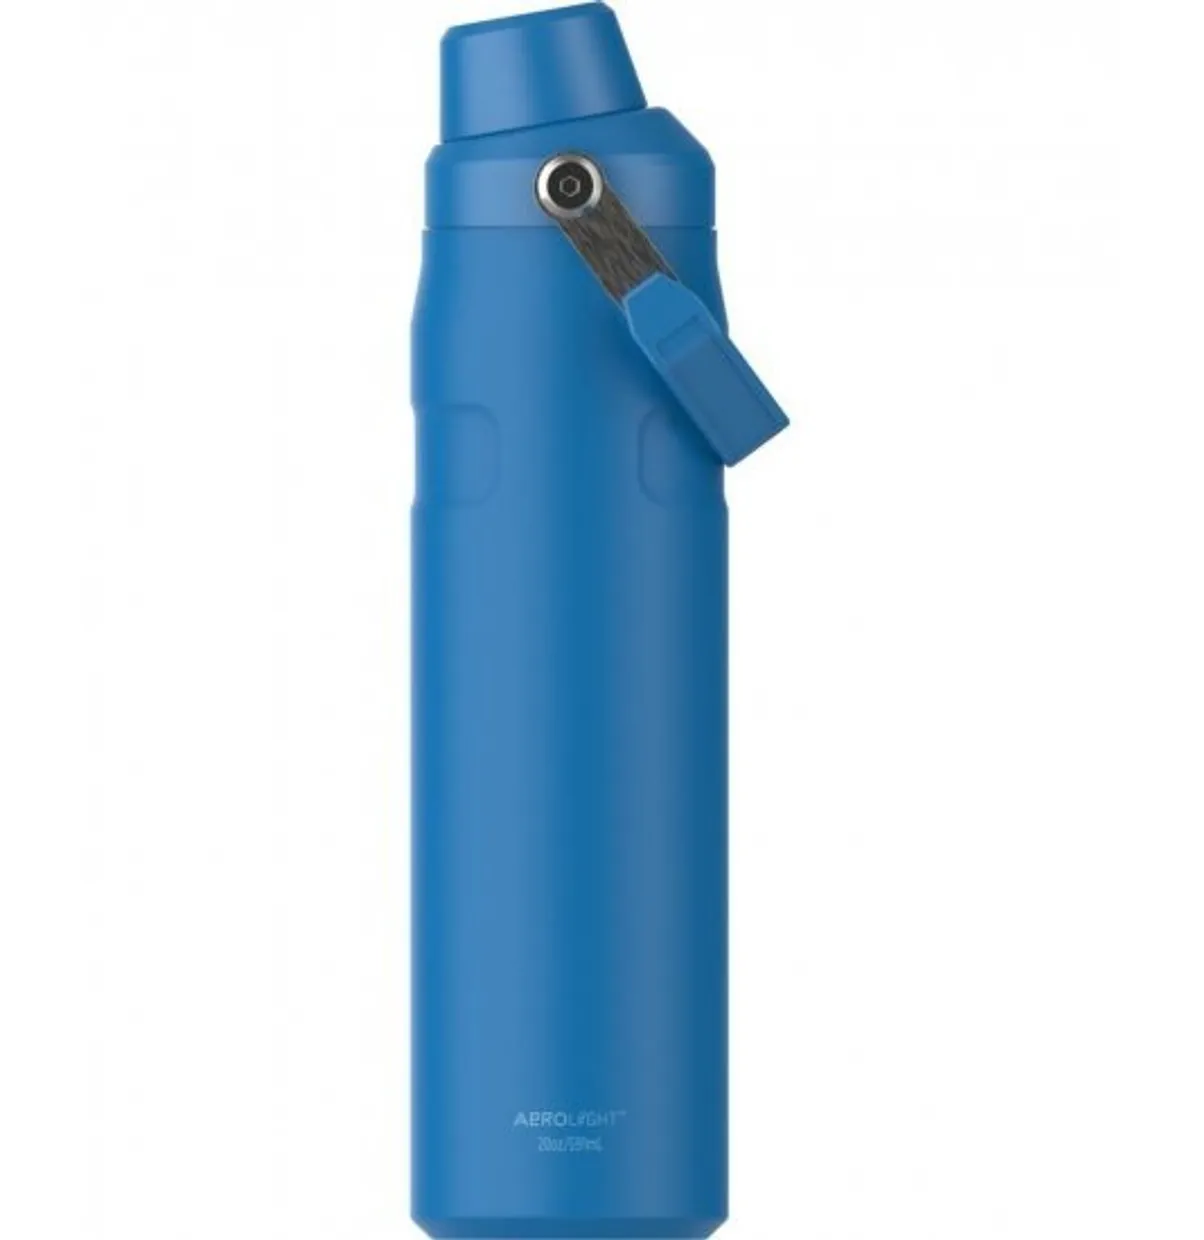 Aerolight Iceflow water bottle 600 ml - azure